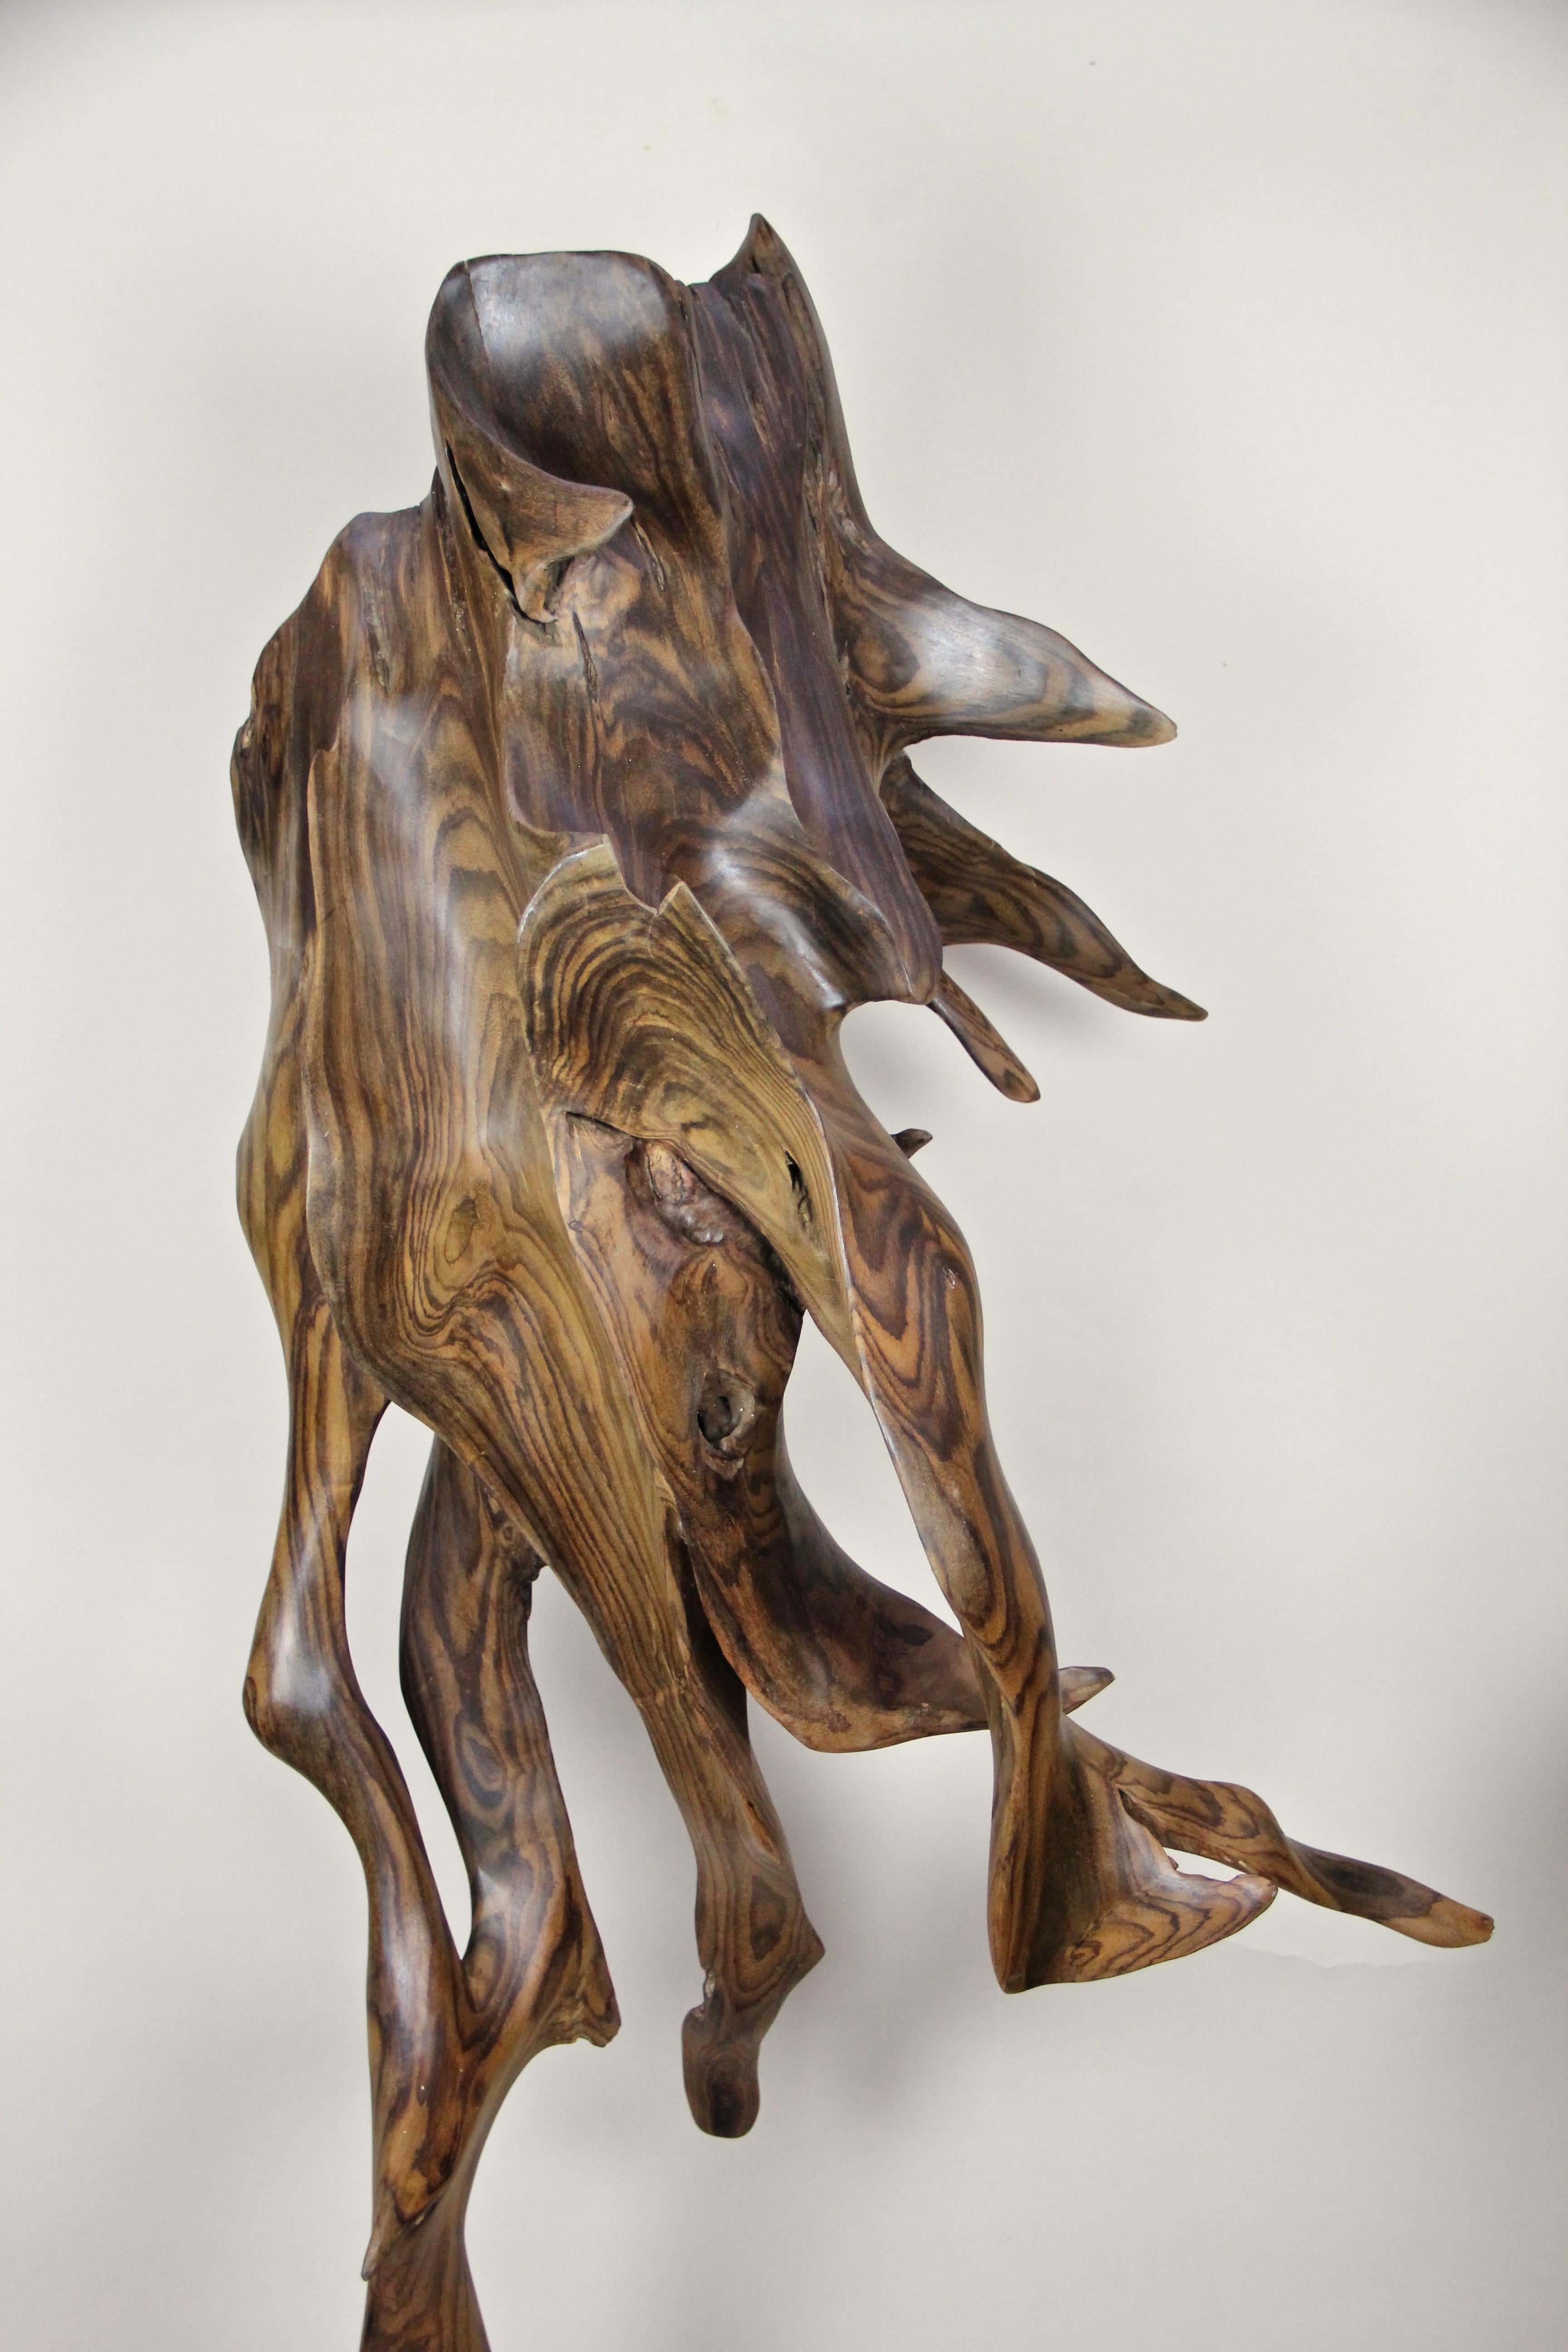 Abstract Organic Sonokeling Wood Root Sculpture on Mat Black Metal Stand 5